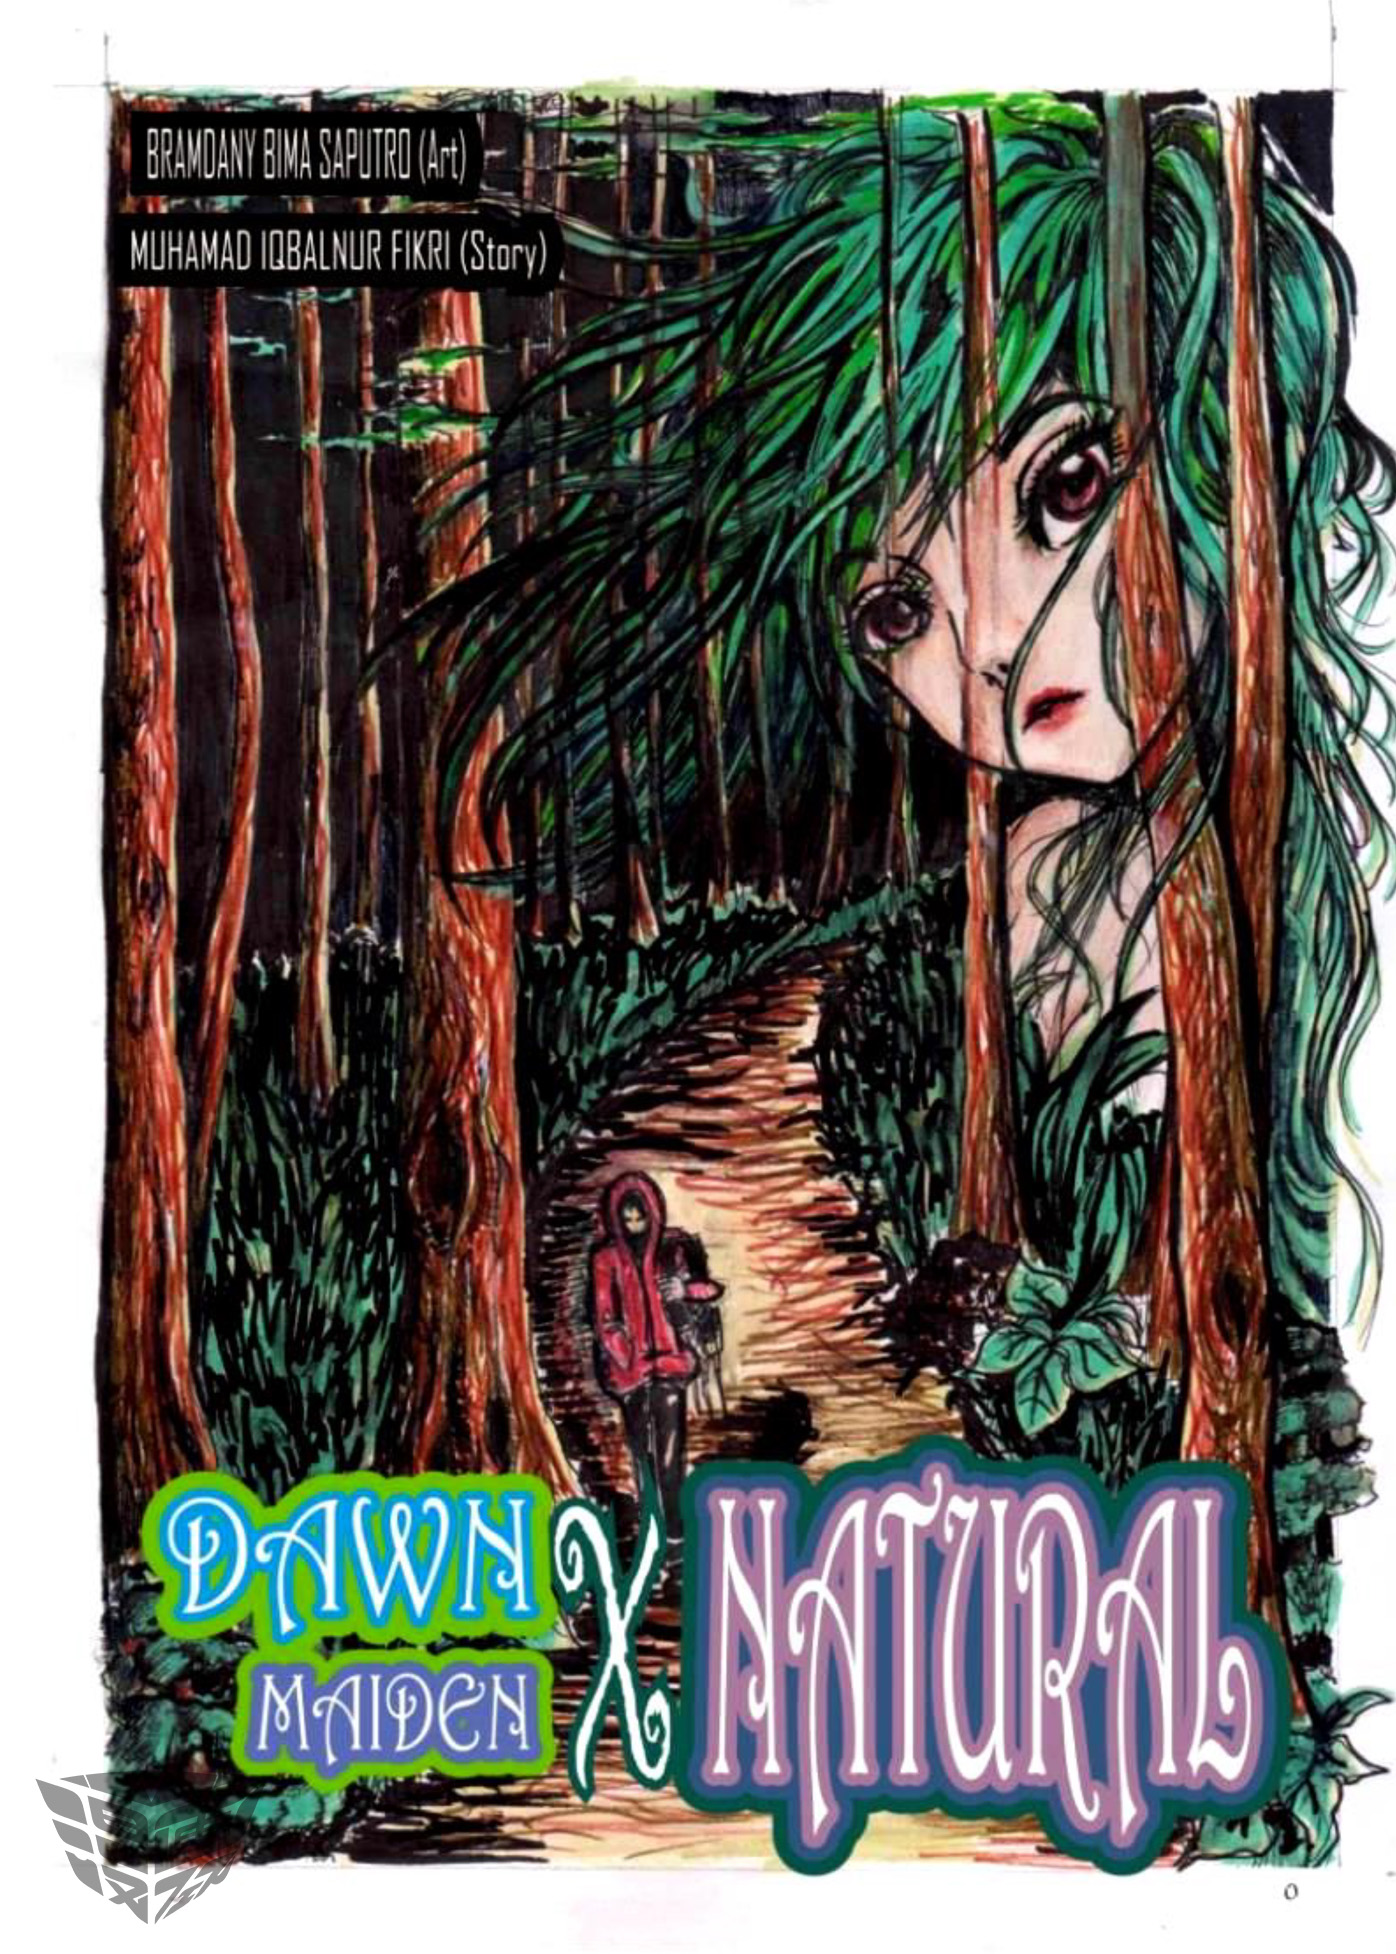 Dawn Maiden x Natural